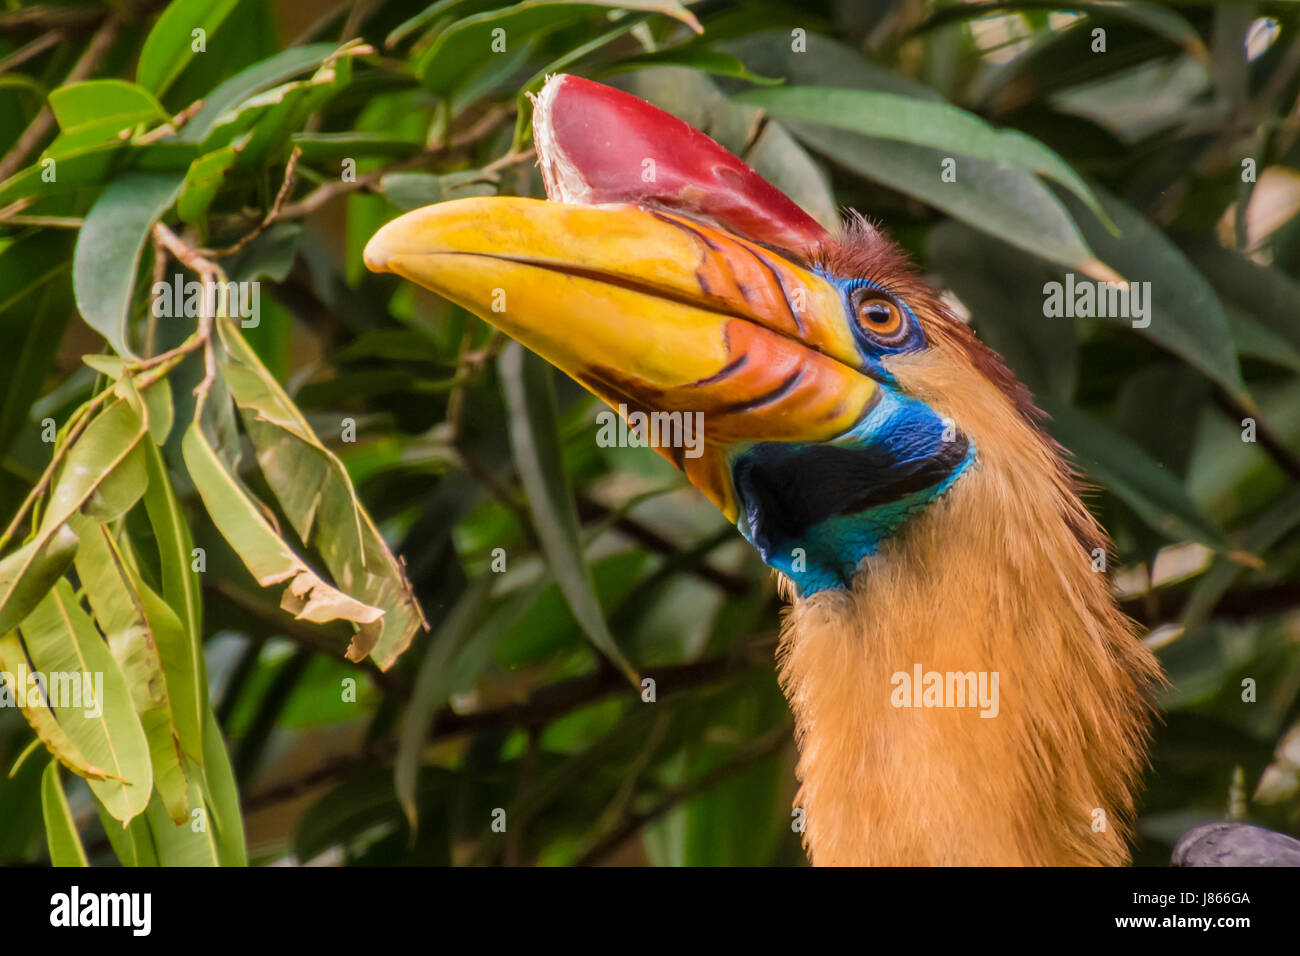 Celebes hornbill bird with red horn and yellow orange beak Stock Photo